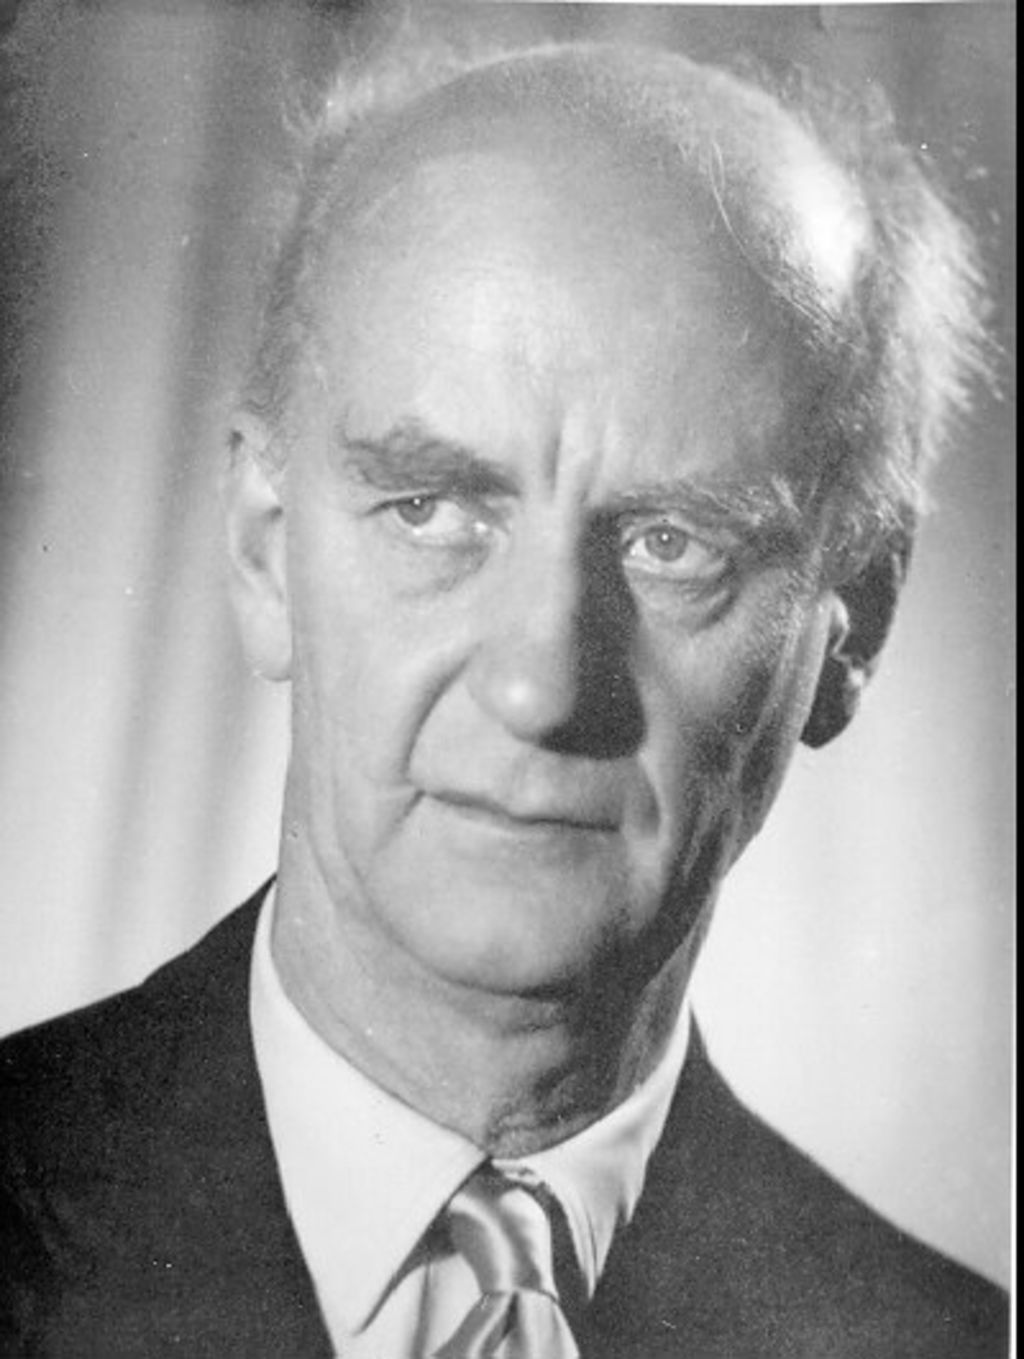 Fotografie: Wilhelm Furtwängler, um 1940